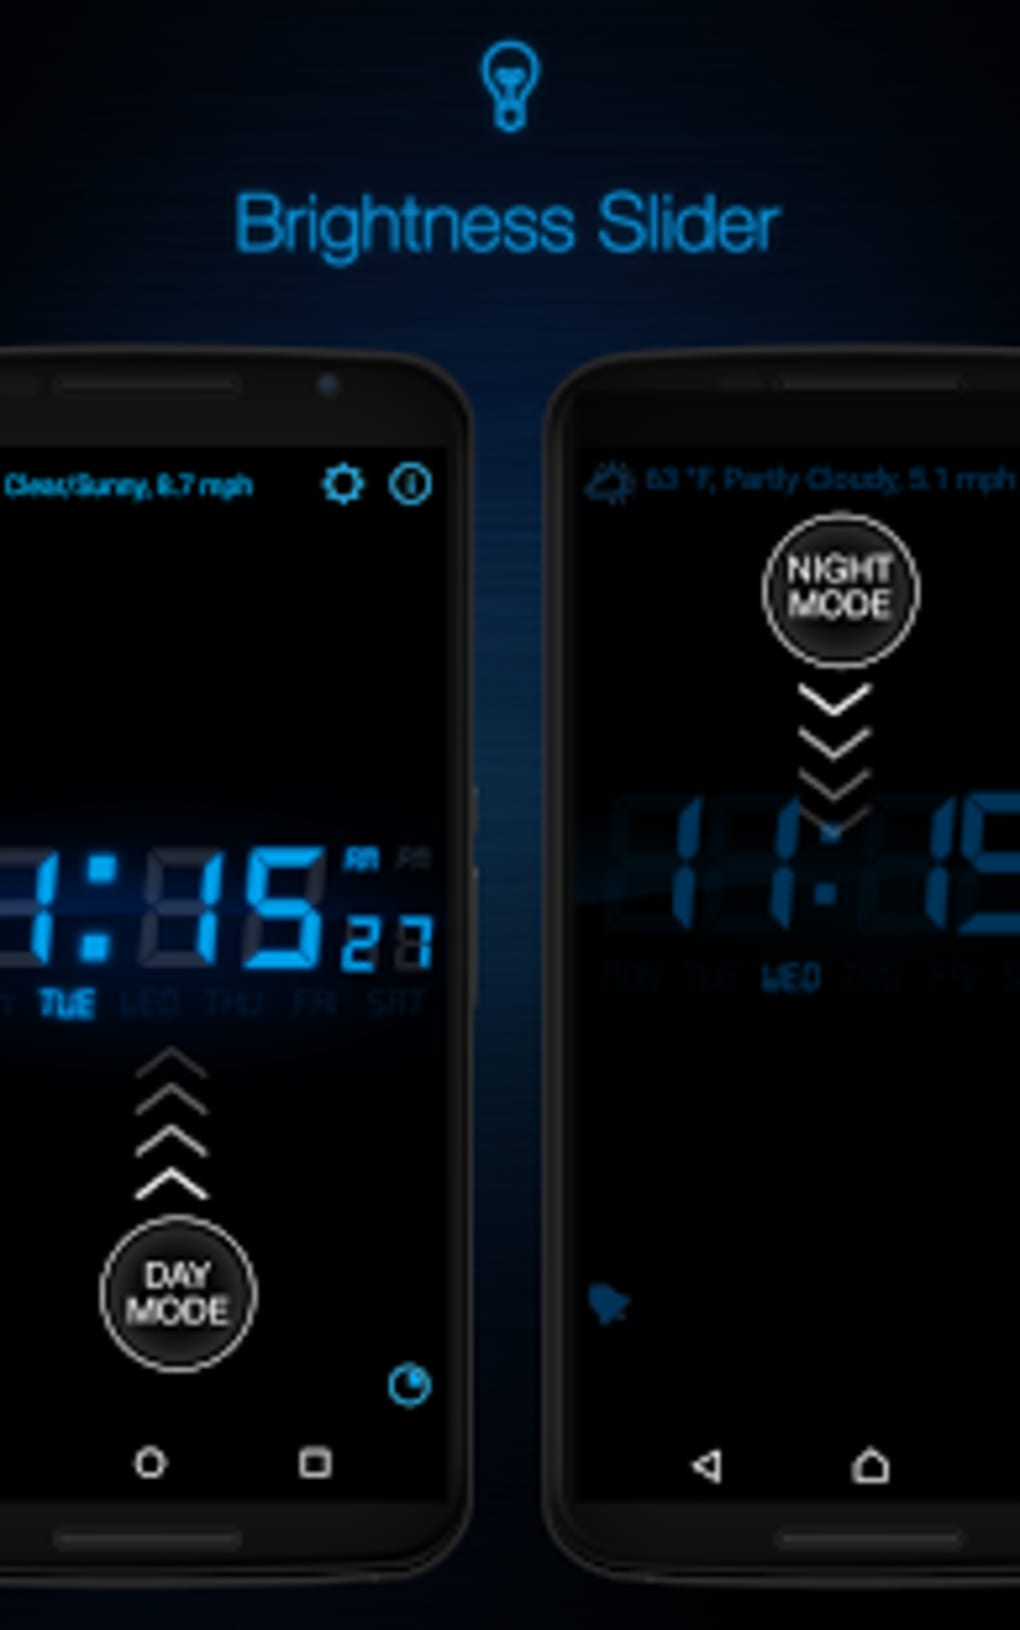 Alarm clock app